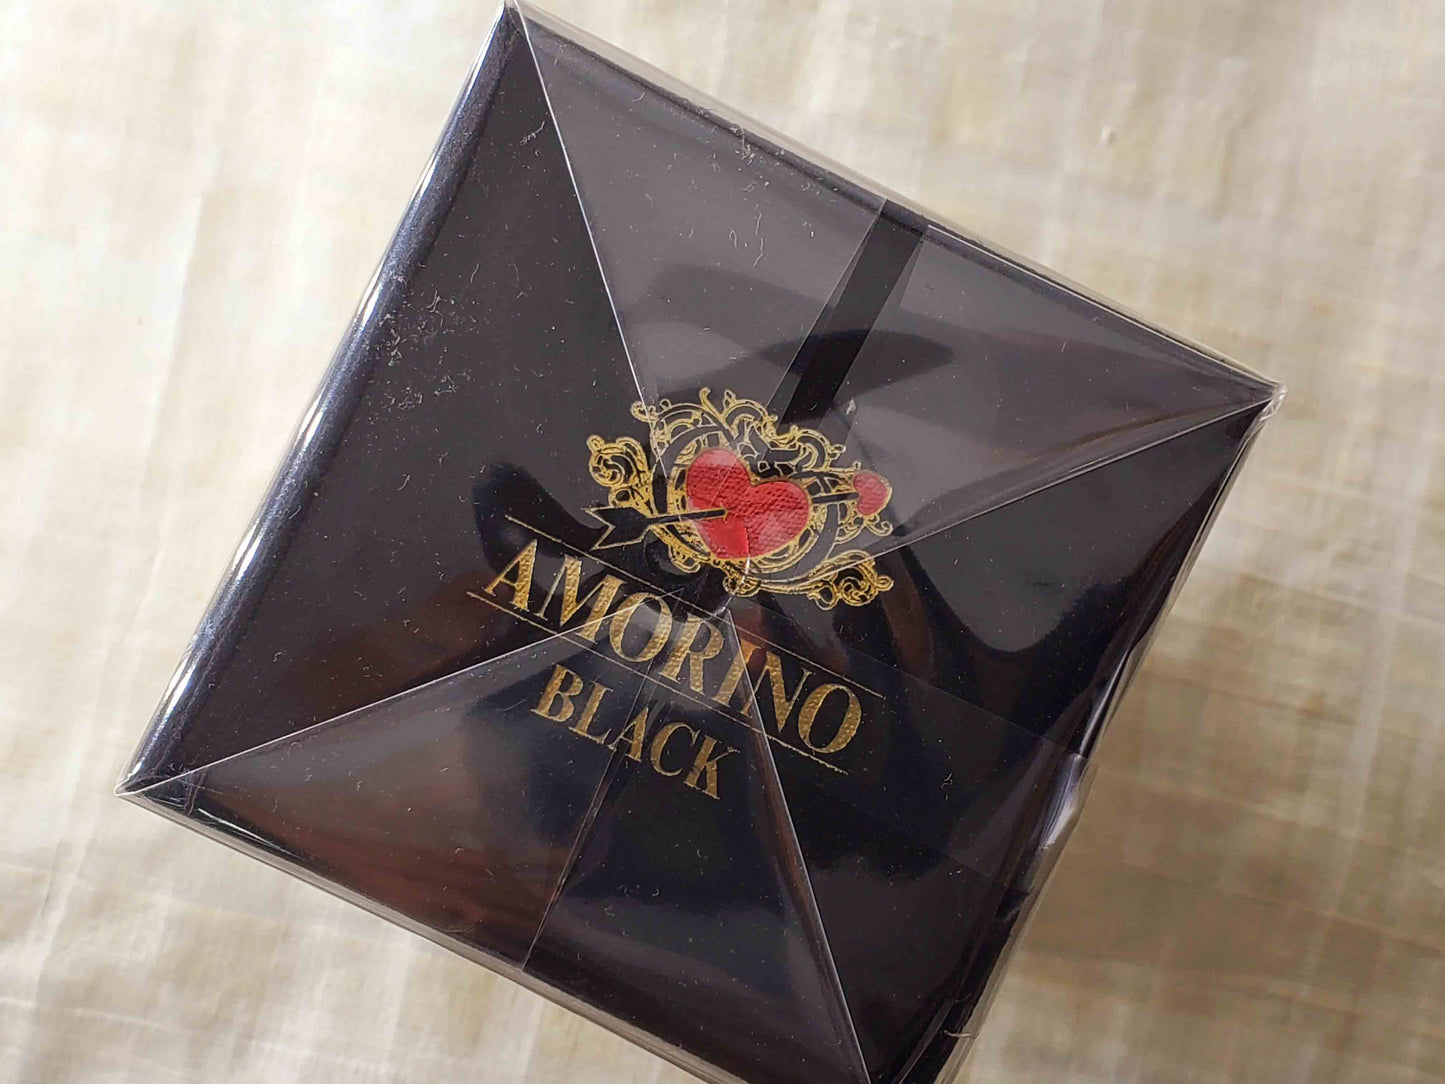 Amorino Black - Essence Paris Gallery EDT Spray 100 ml 3.4 oz, Vintage, Rare, Sealed